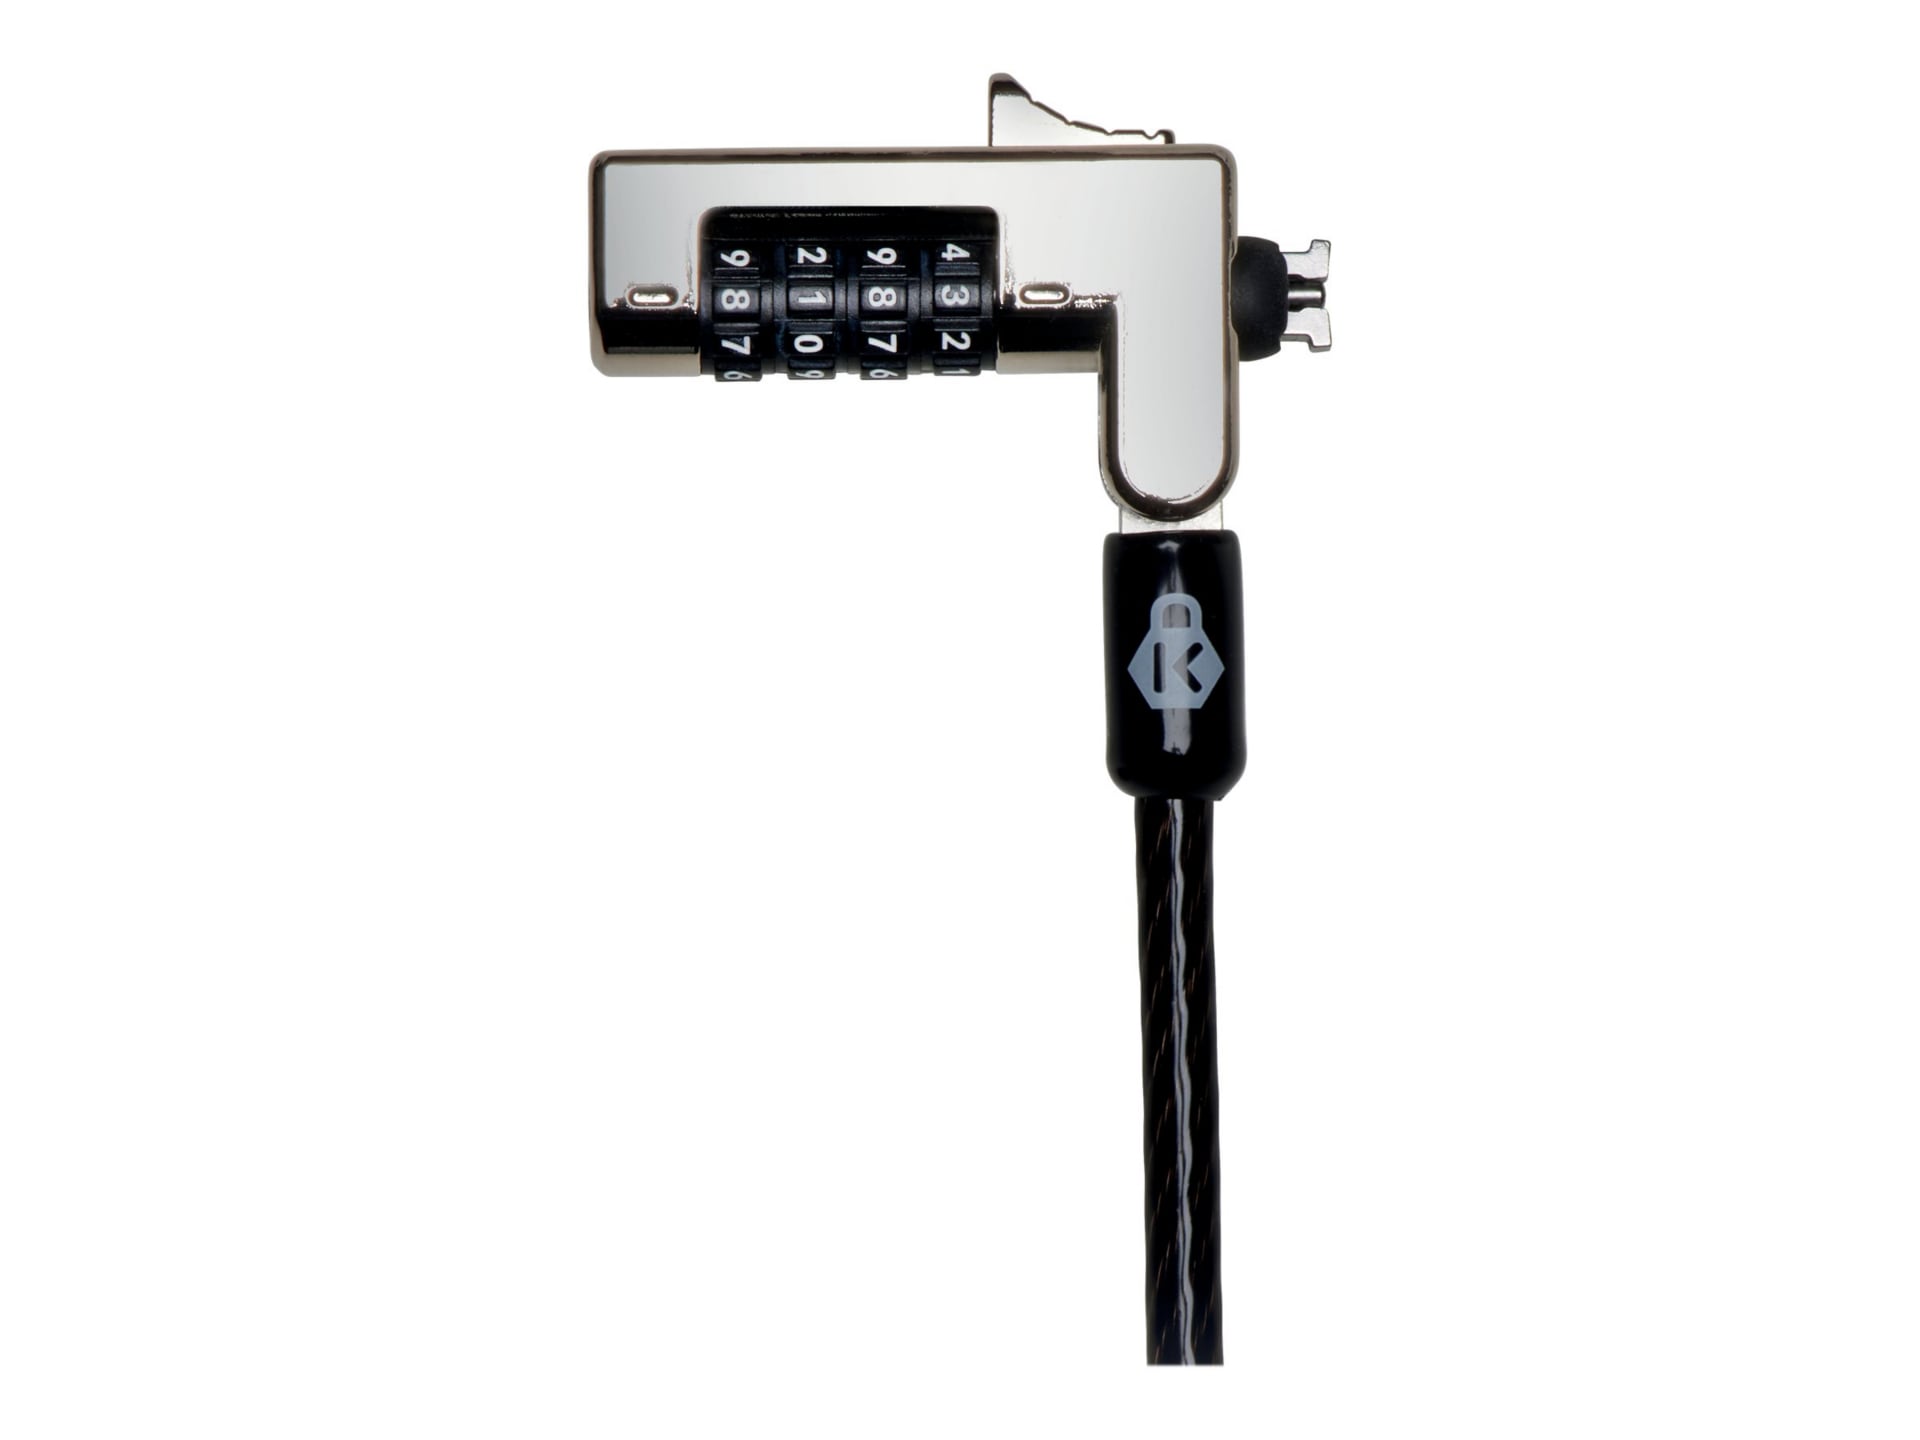 Kensington Slim NanoSaver Combination Laptop Lock - security cable lock